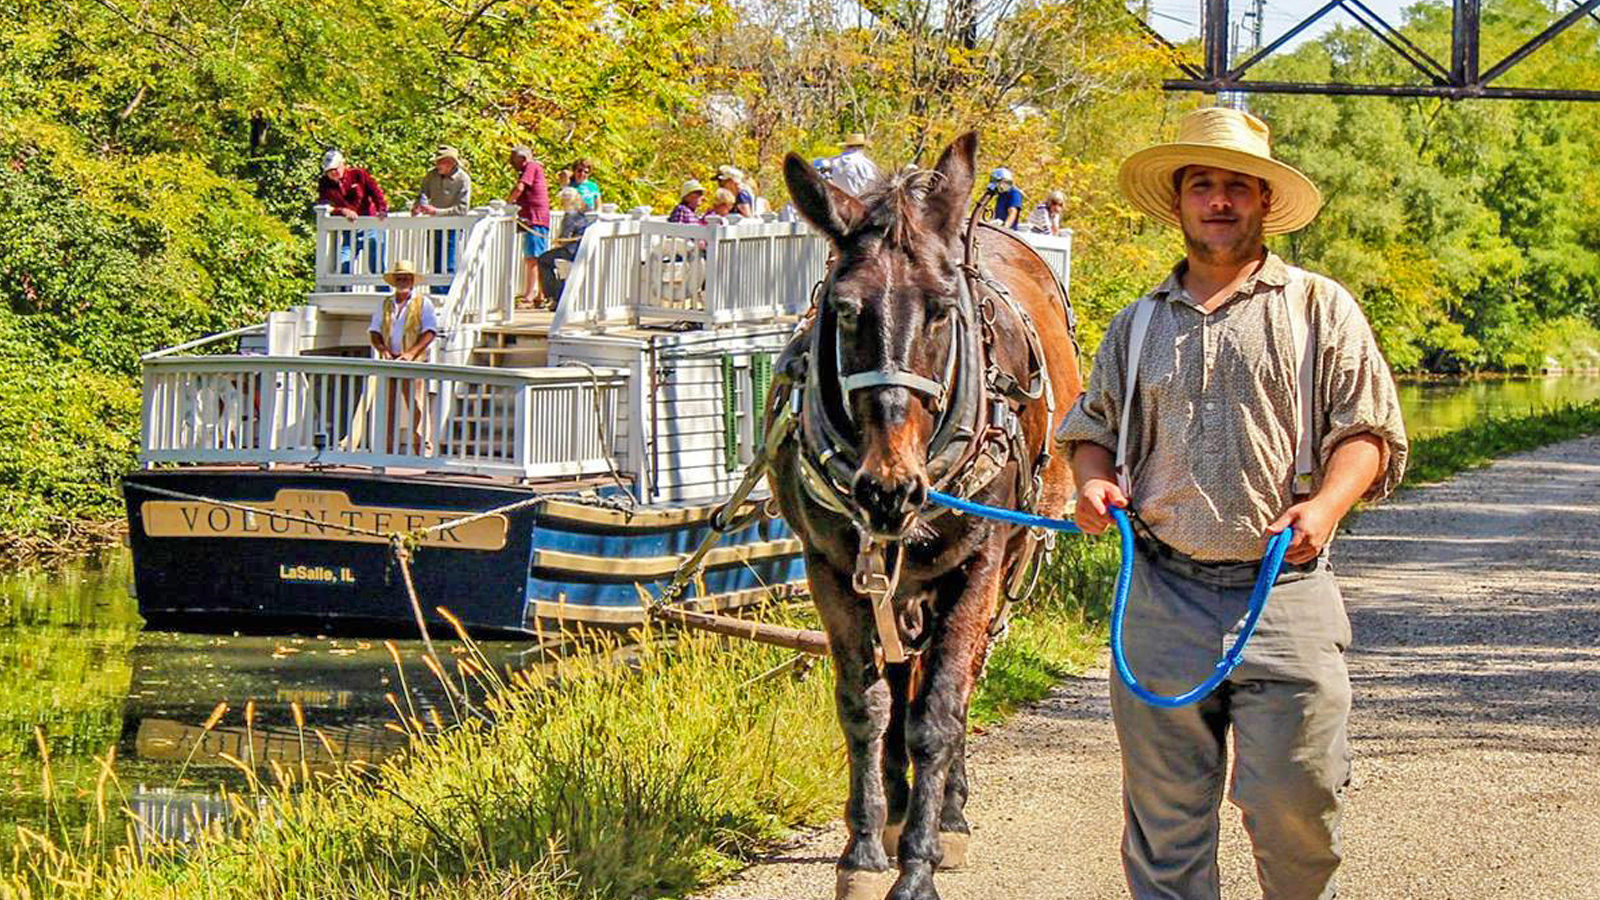 Mule tender leading a mule as it tugs the Canal Boat.